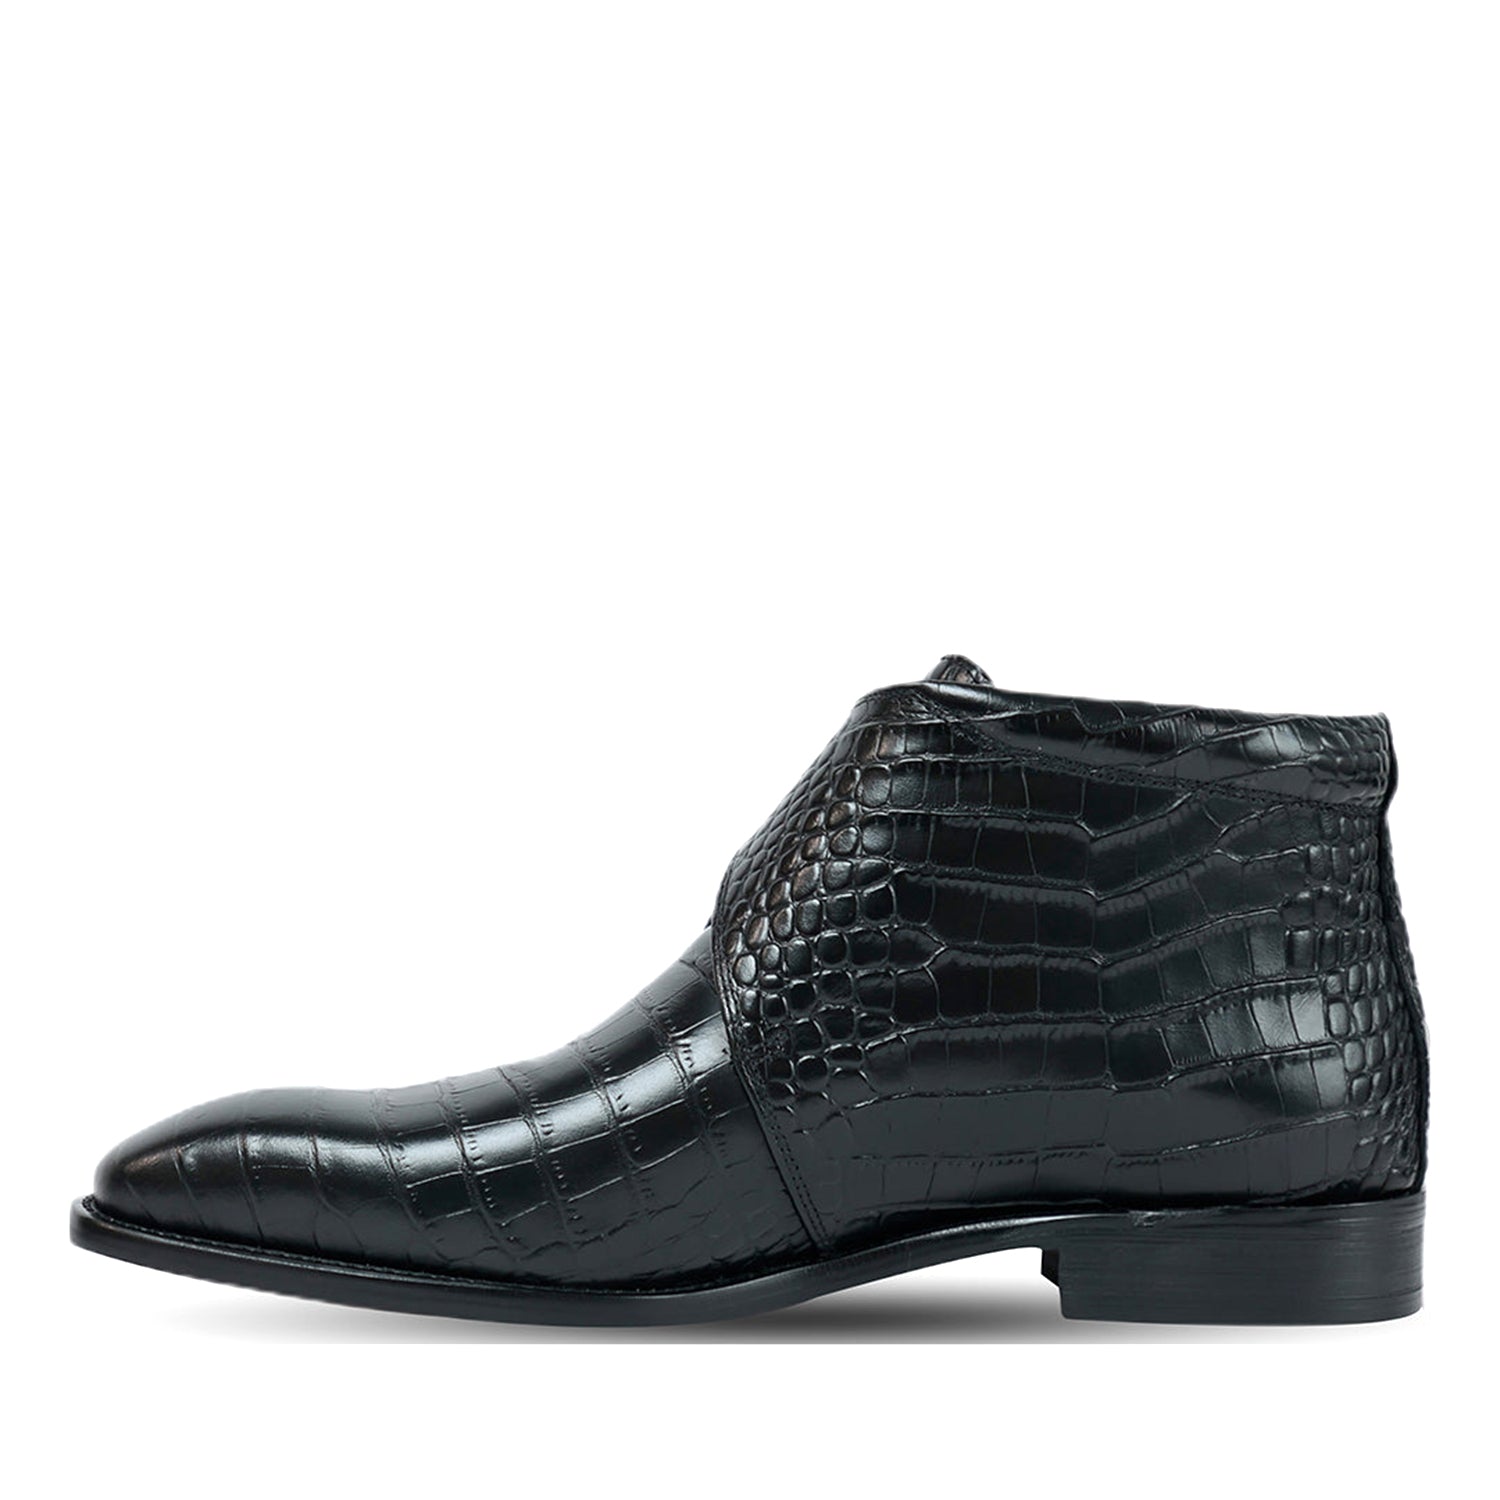 Black Croco Leather Boots